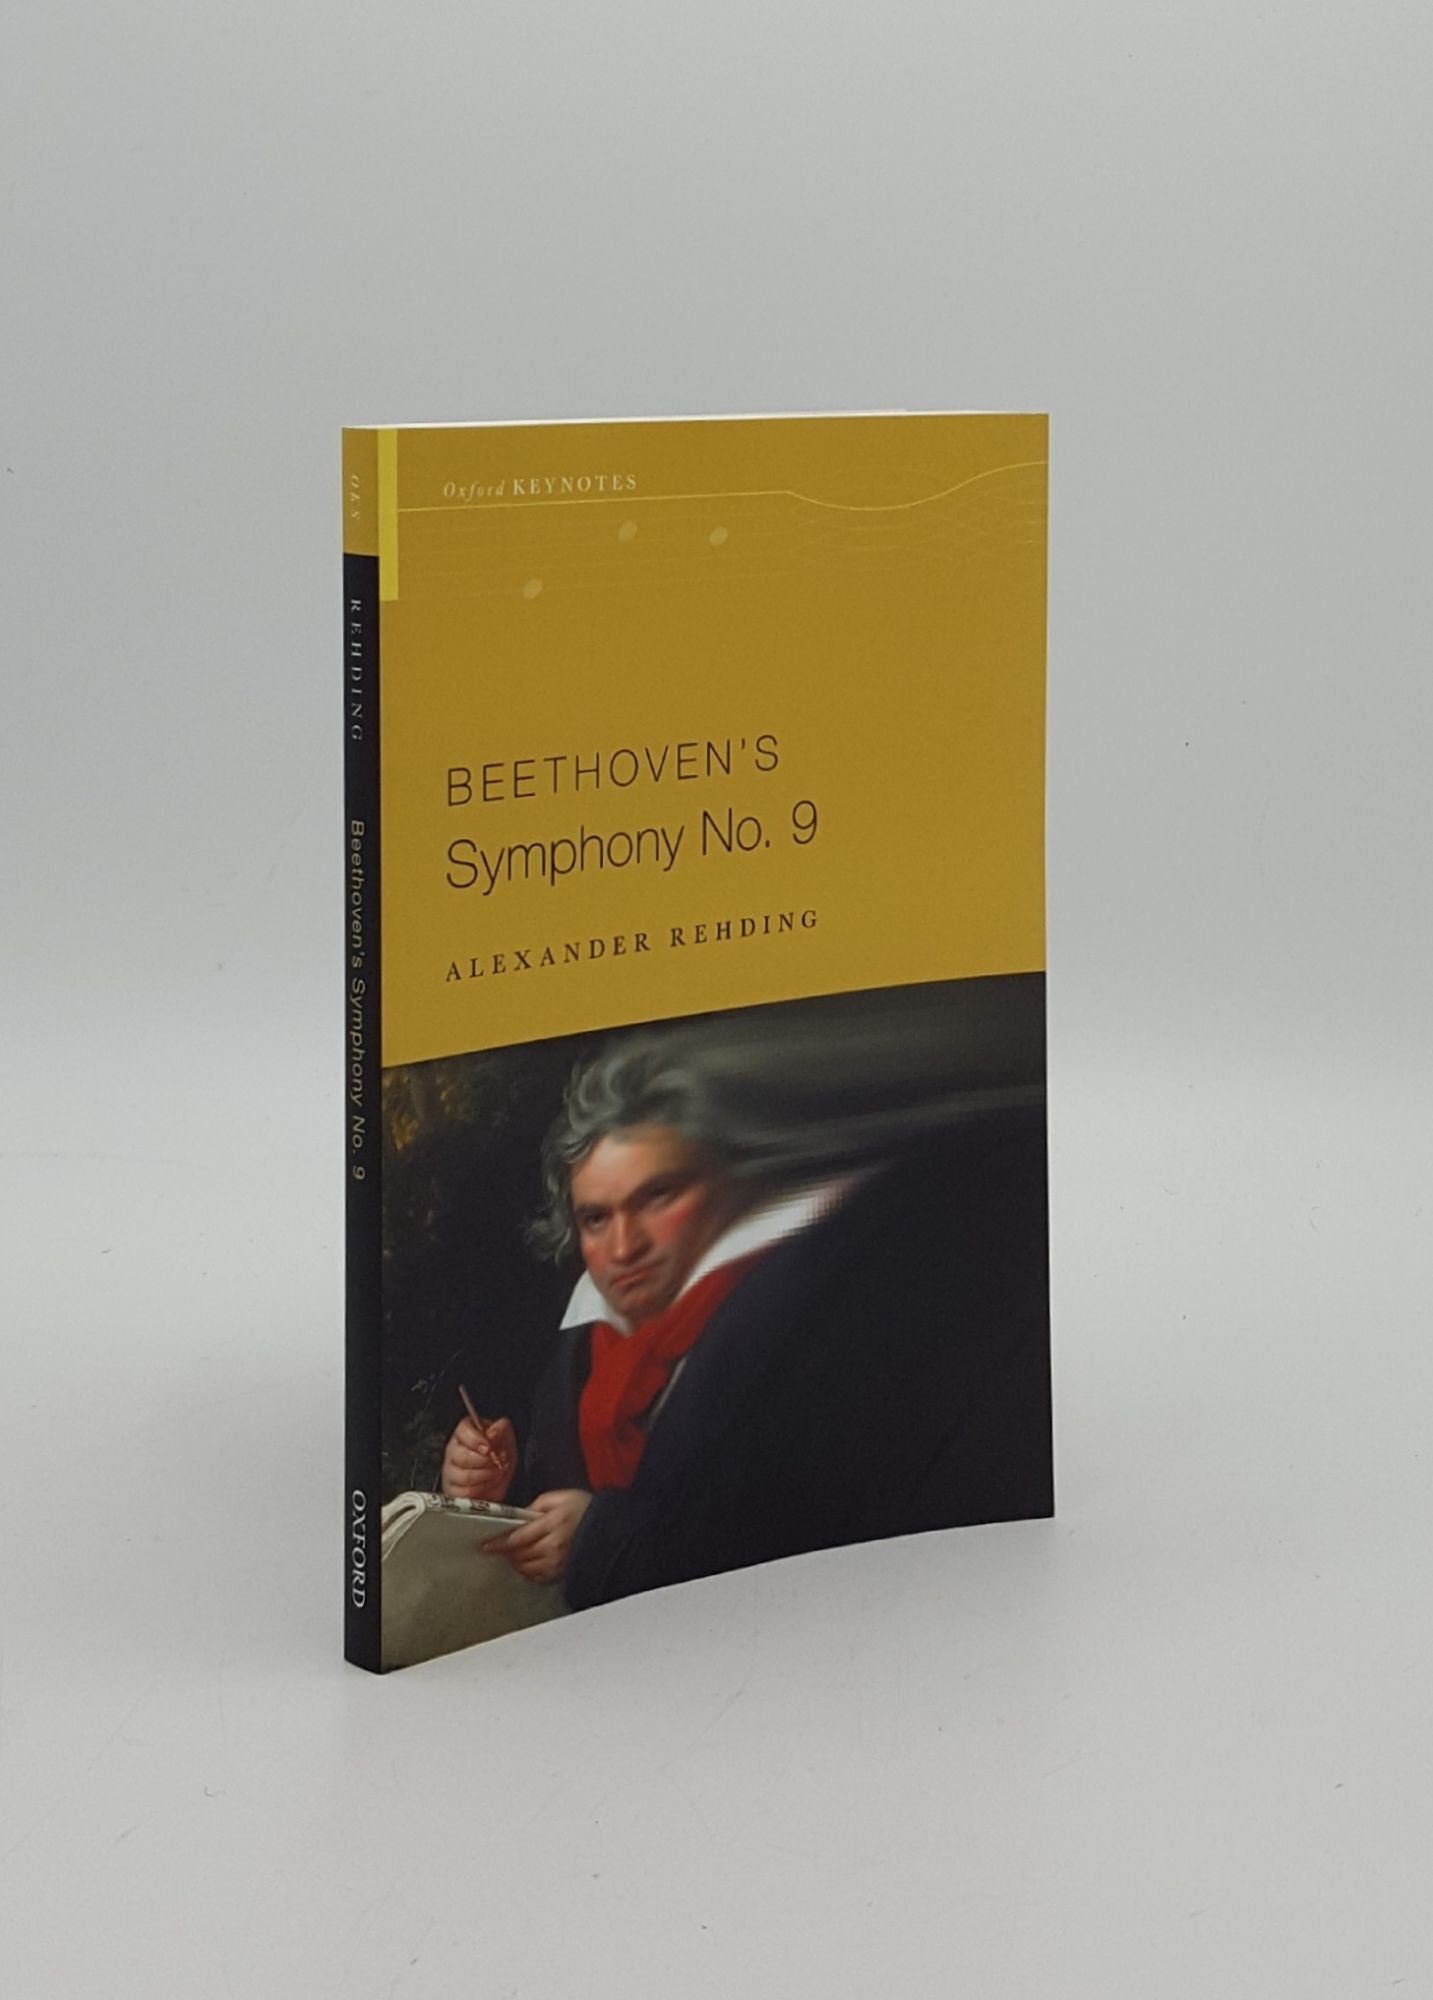 REHDING Alexander - Beethoven's Symphony No 9 (Oxford Keynotes)